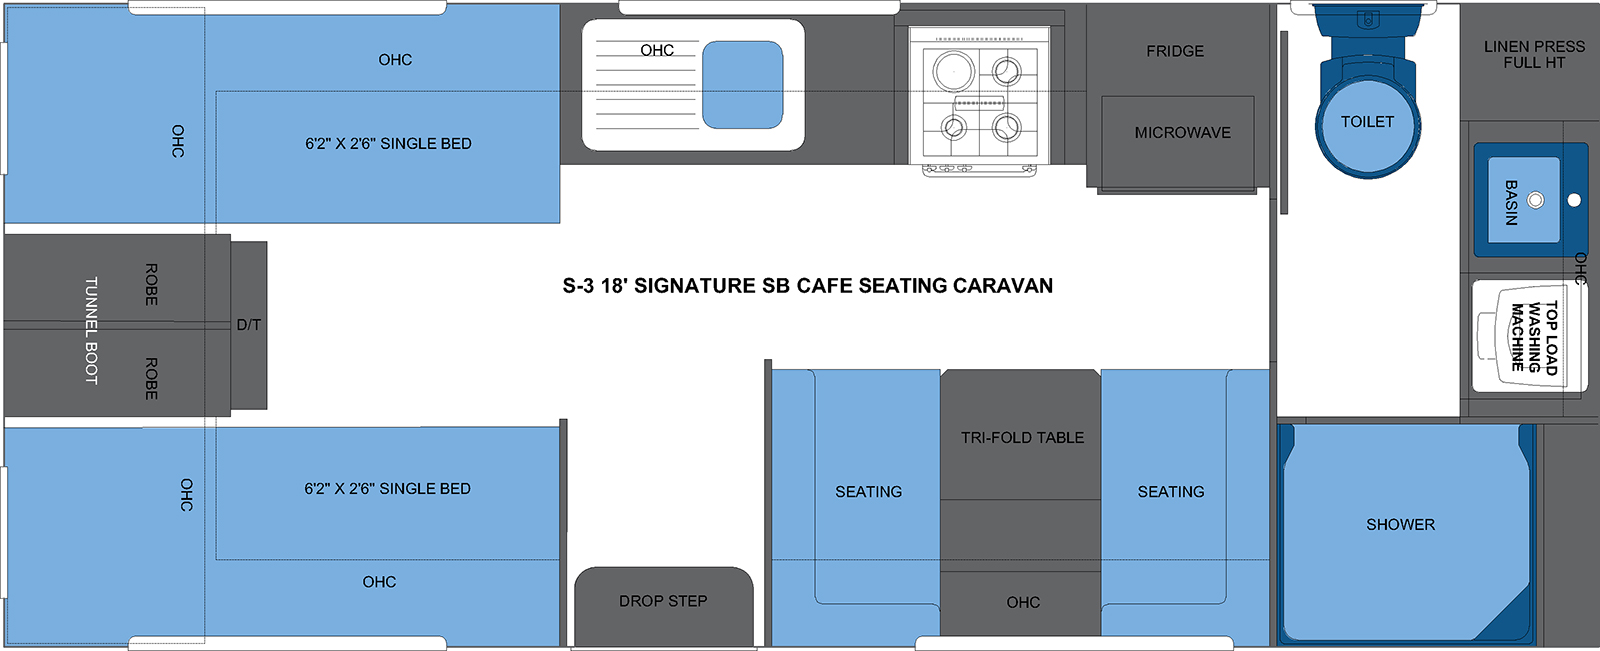 S-3 18' SIGNATURE SB CAFE SEATING CARAVAN